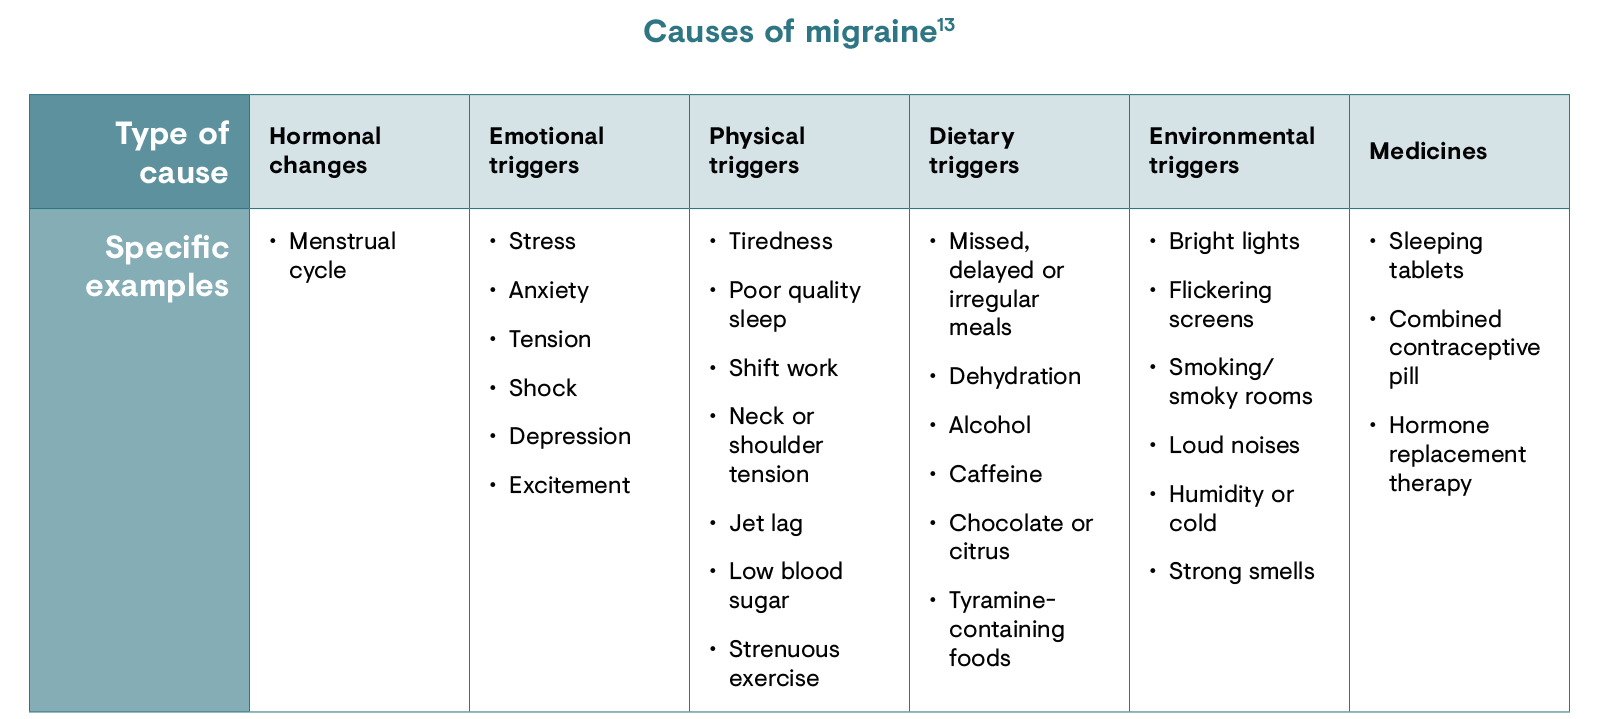 Causes of migraine